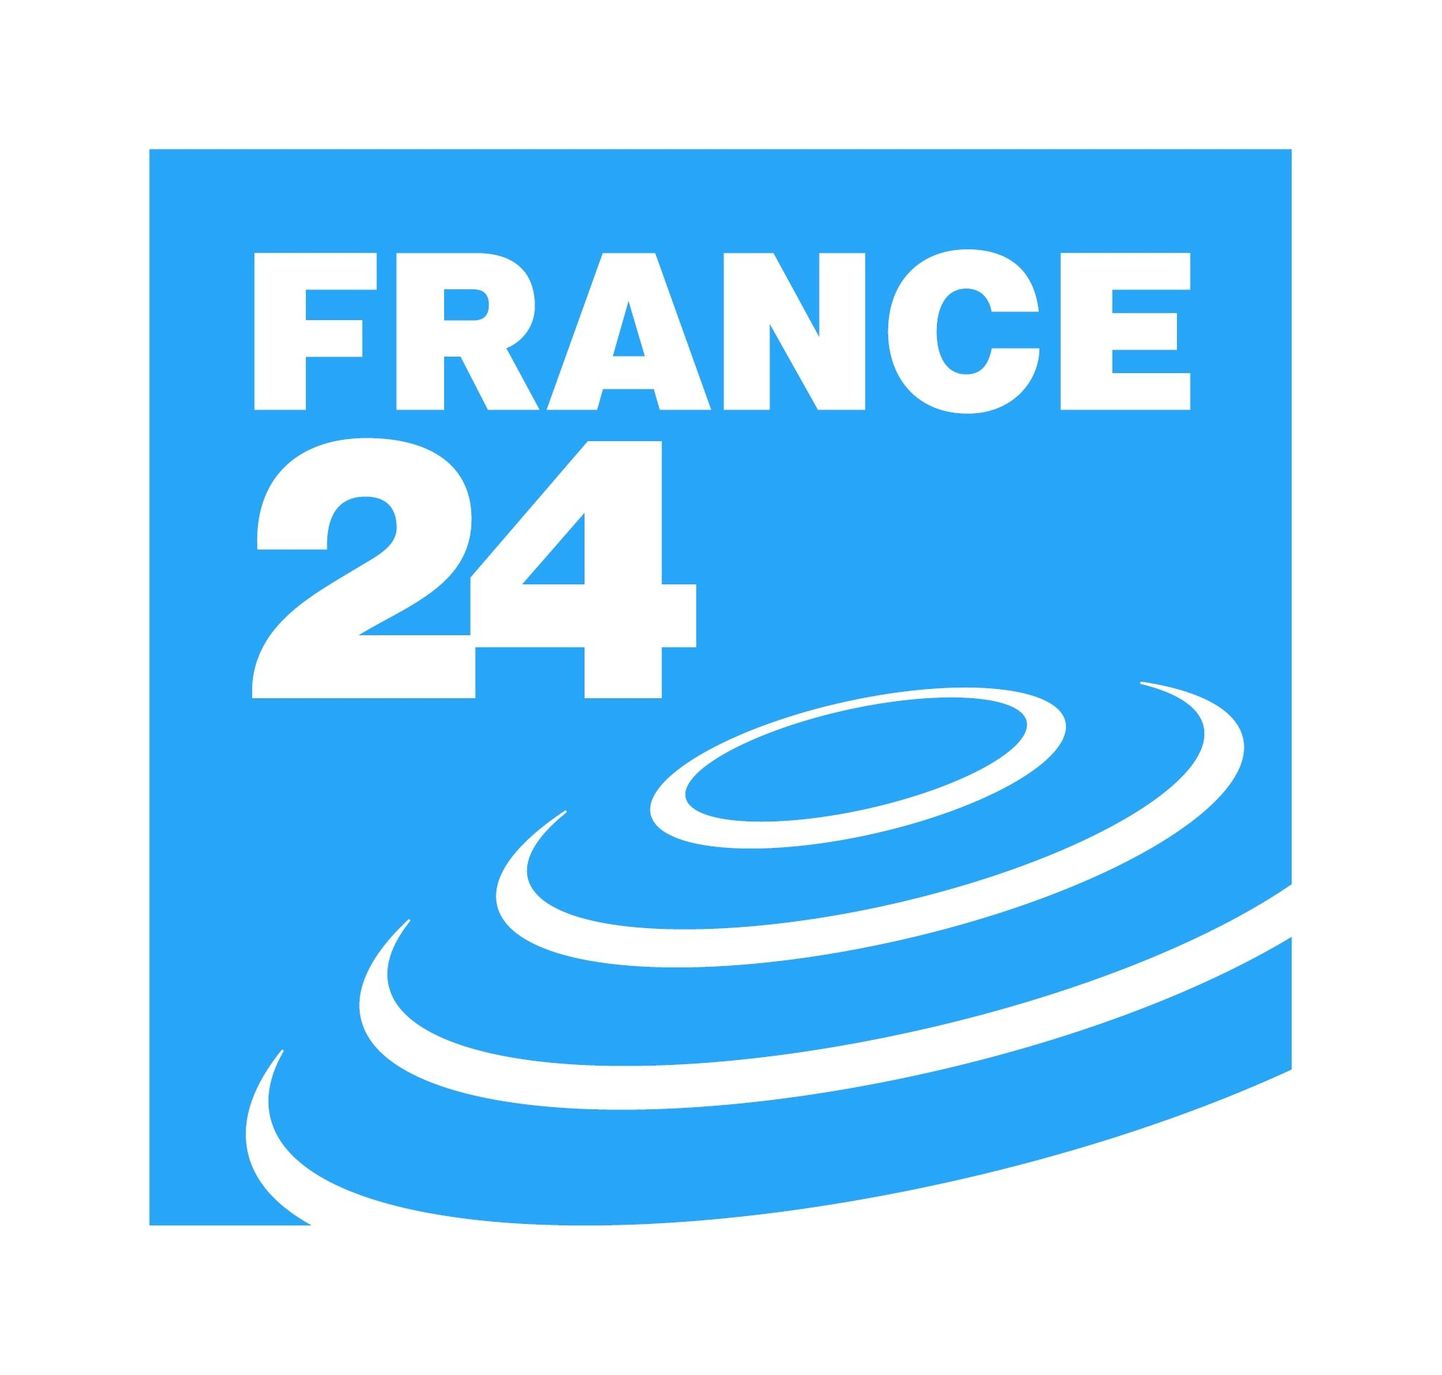 France 24 logo.